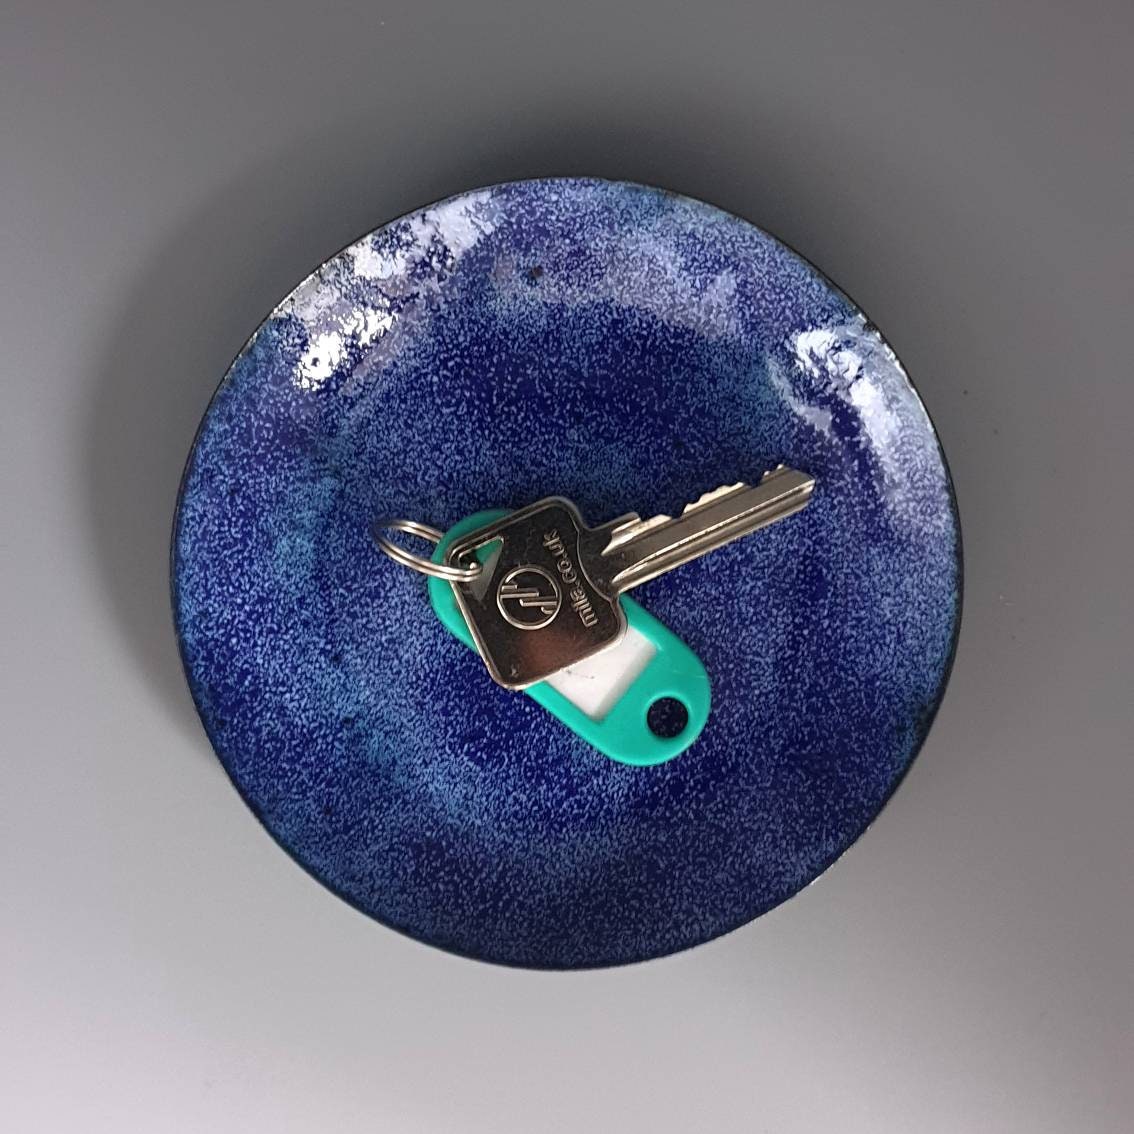 Sapphire Blue Enamel Trinket Dish tuppu.net/1afb647d #ShopIndie #Etsy #UKCraftersHour #MaisyPlum #MyNewTag #MHHSBD #SapphireBlueDish